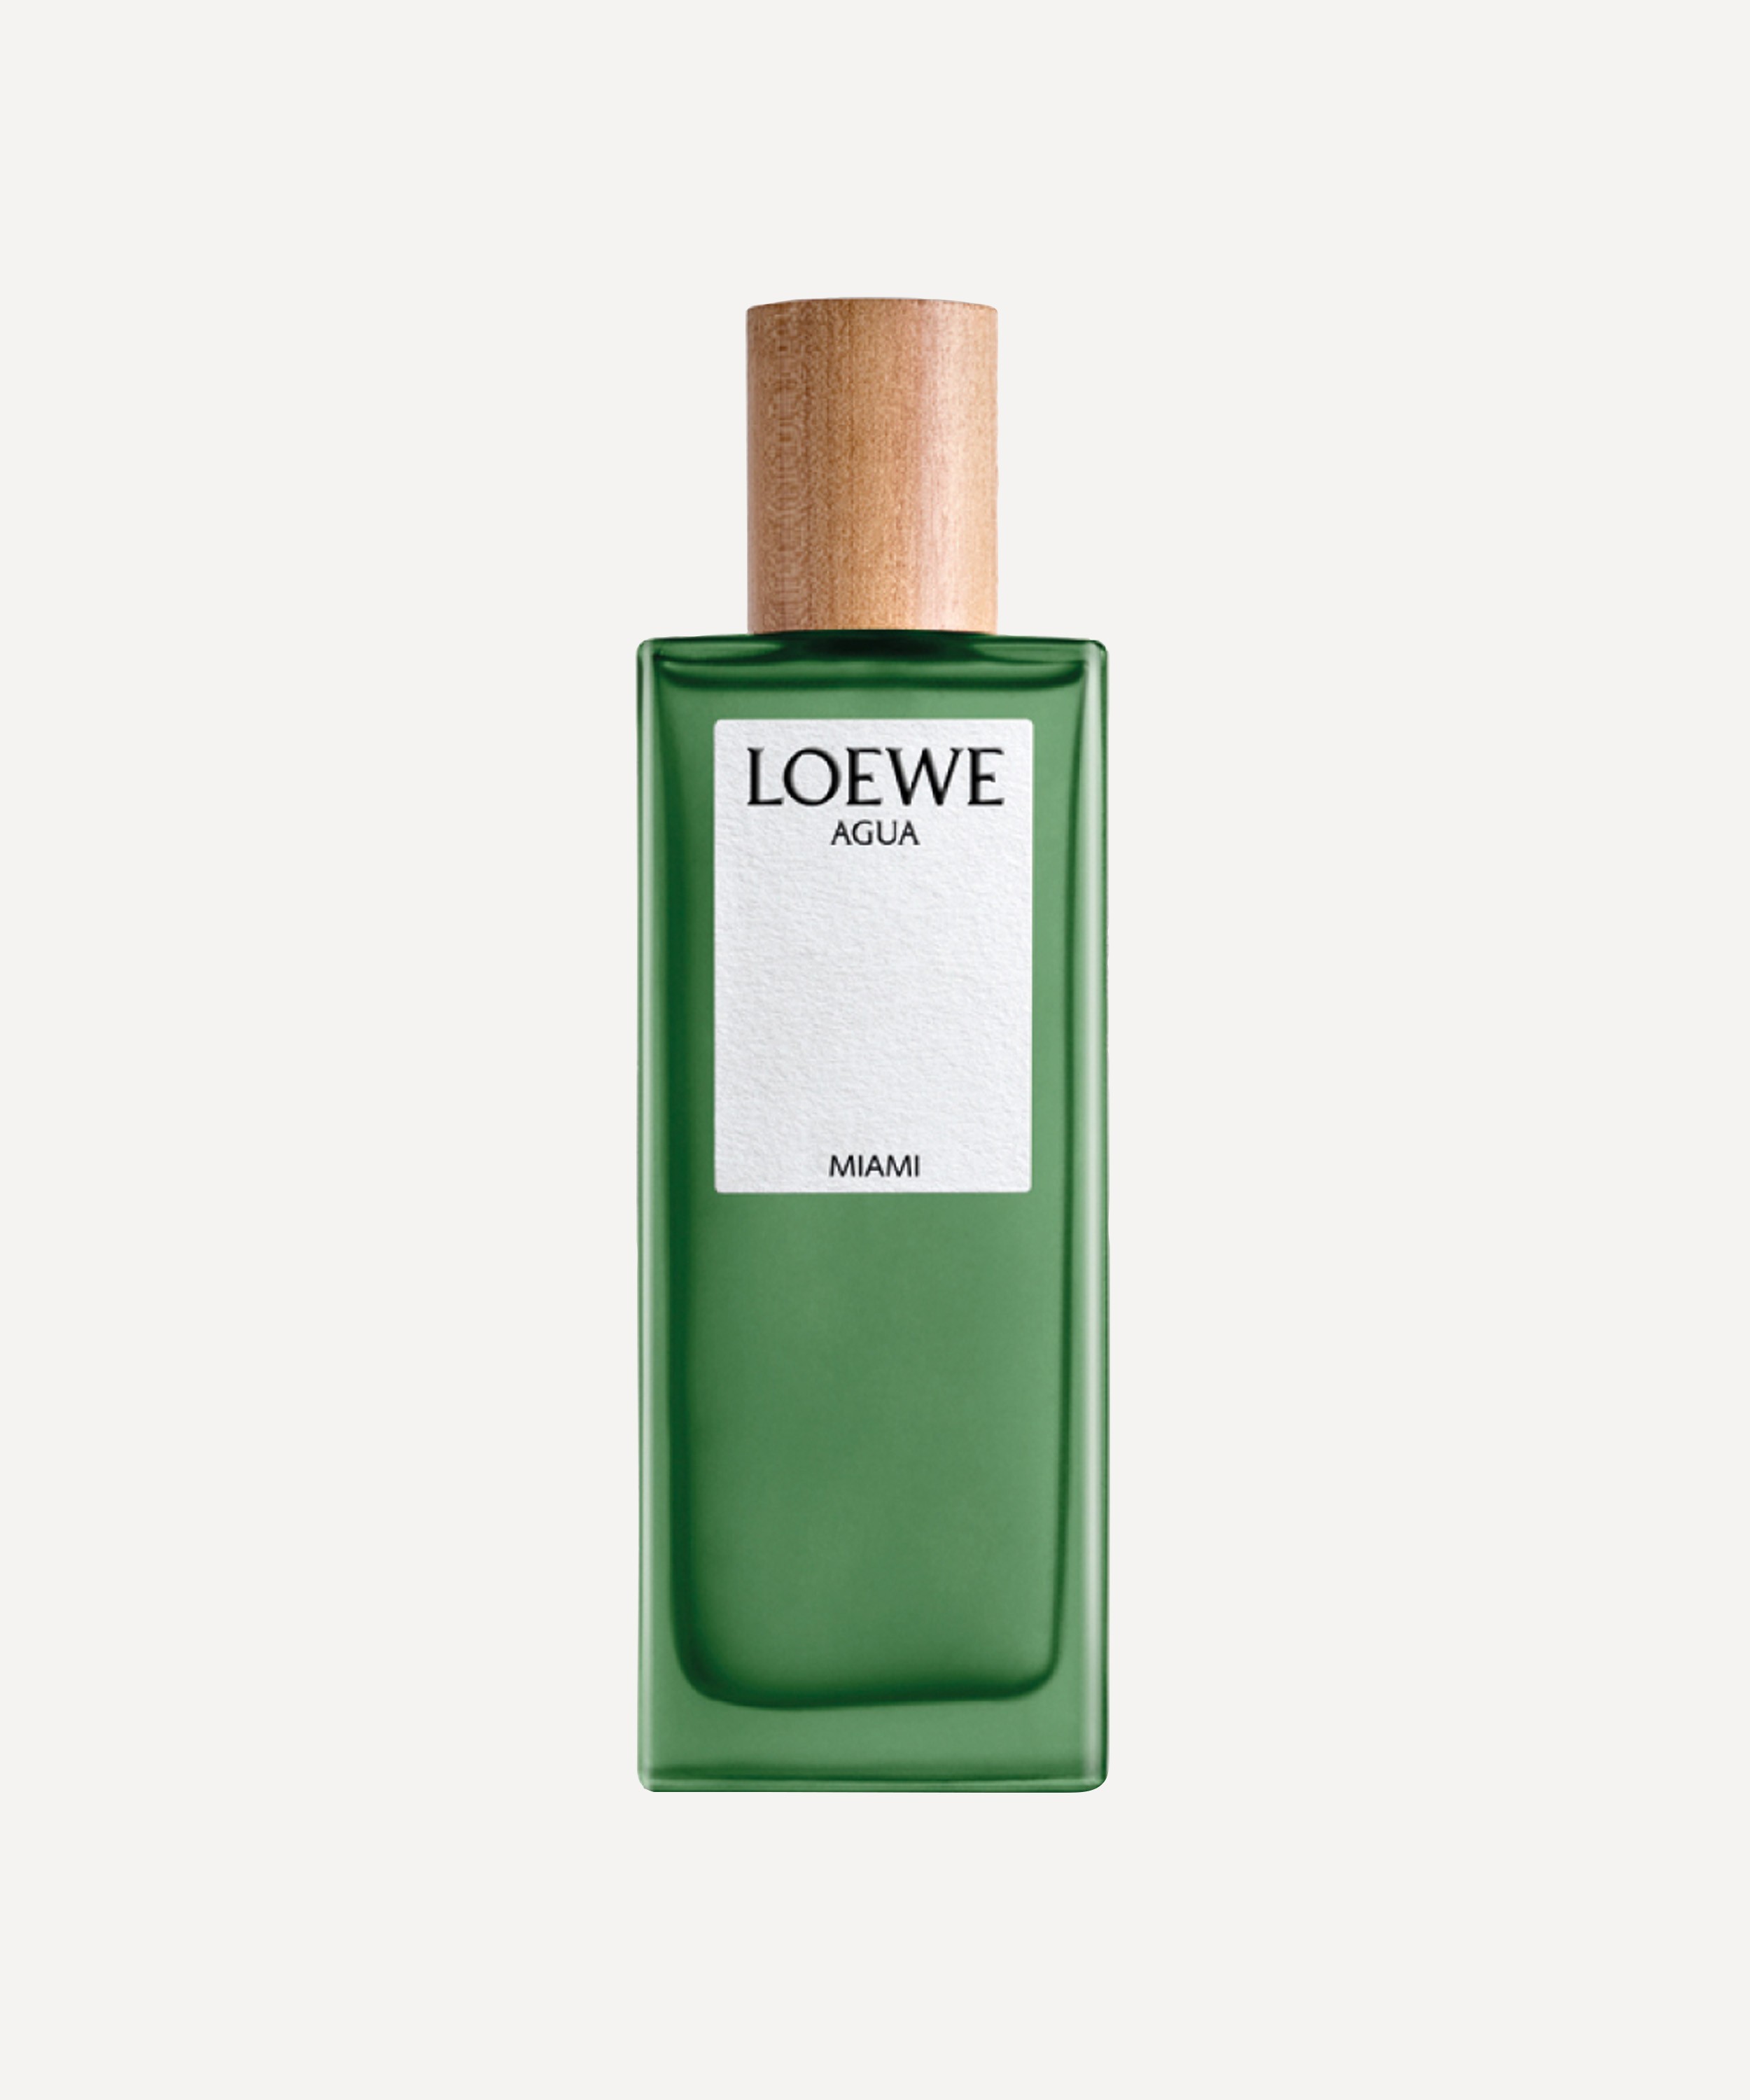 Loewe - Agua Miami Eau de Toilette 100ml